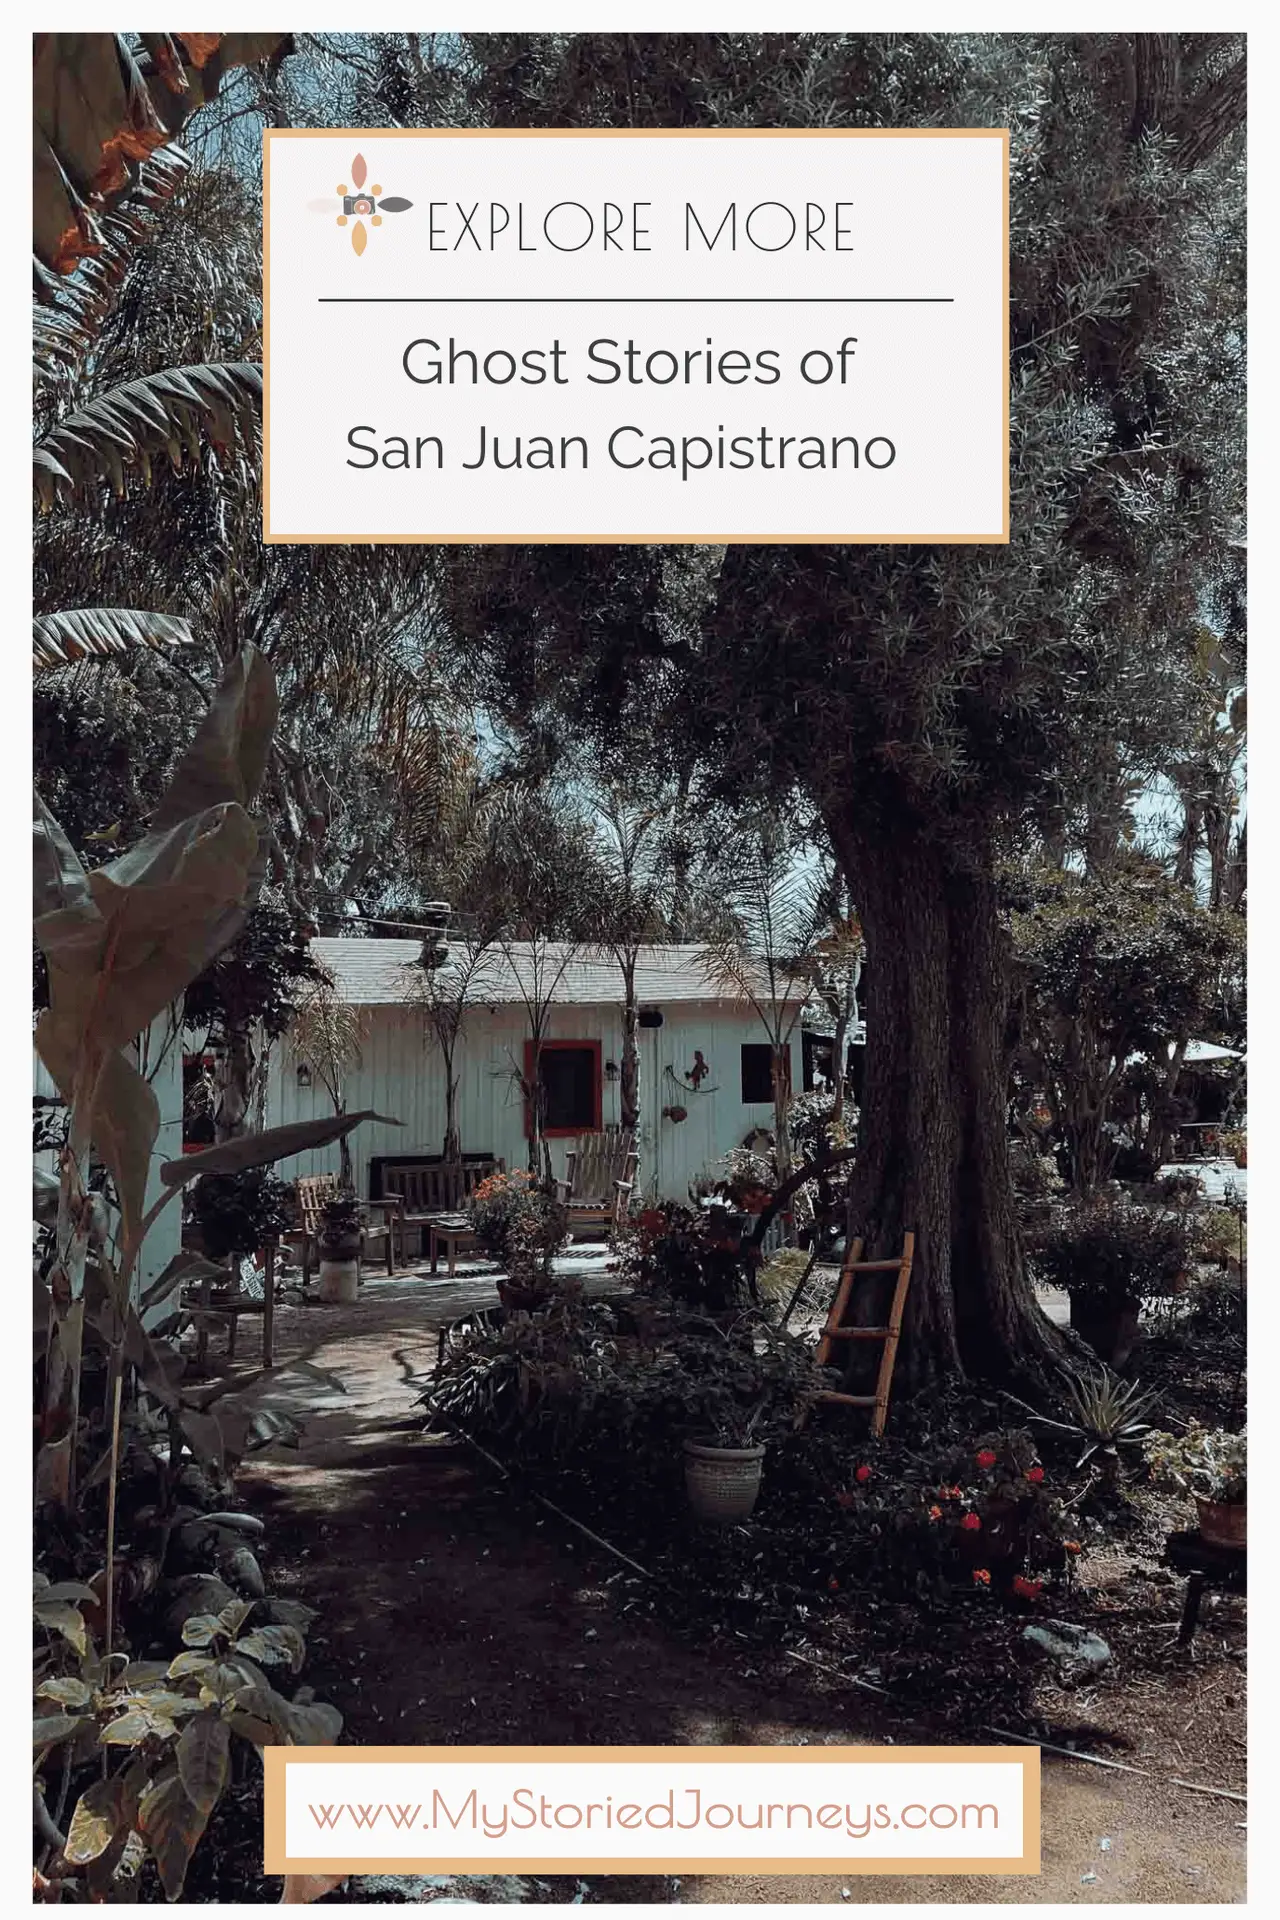 Ghost stories of San Juan Capistrano